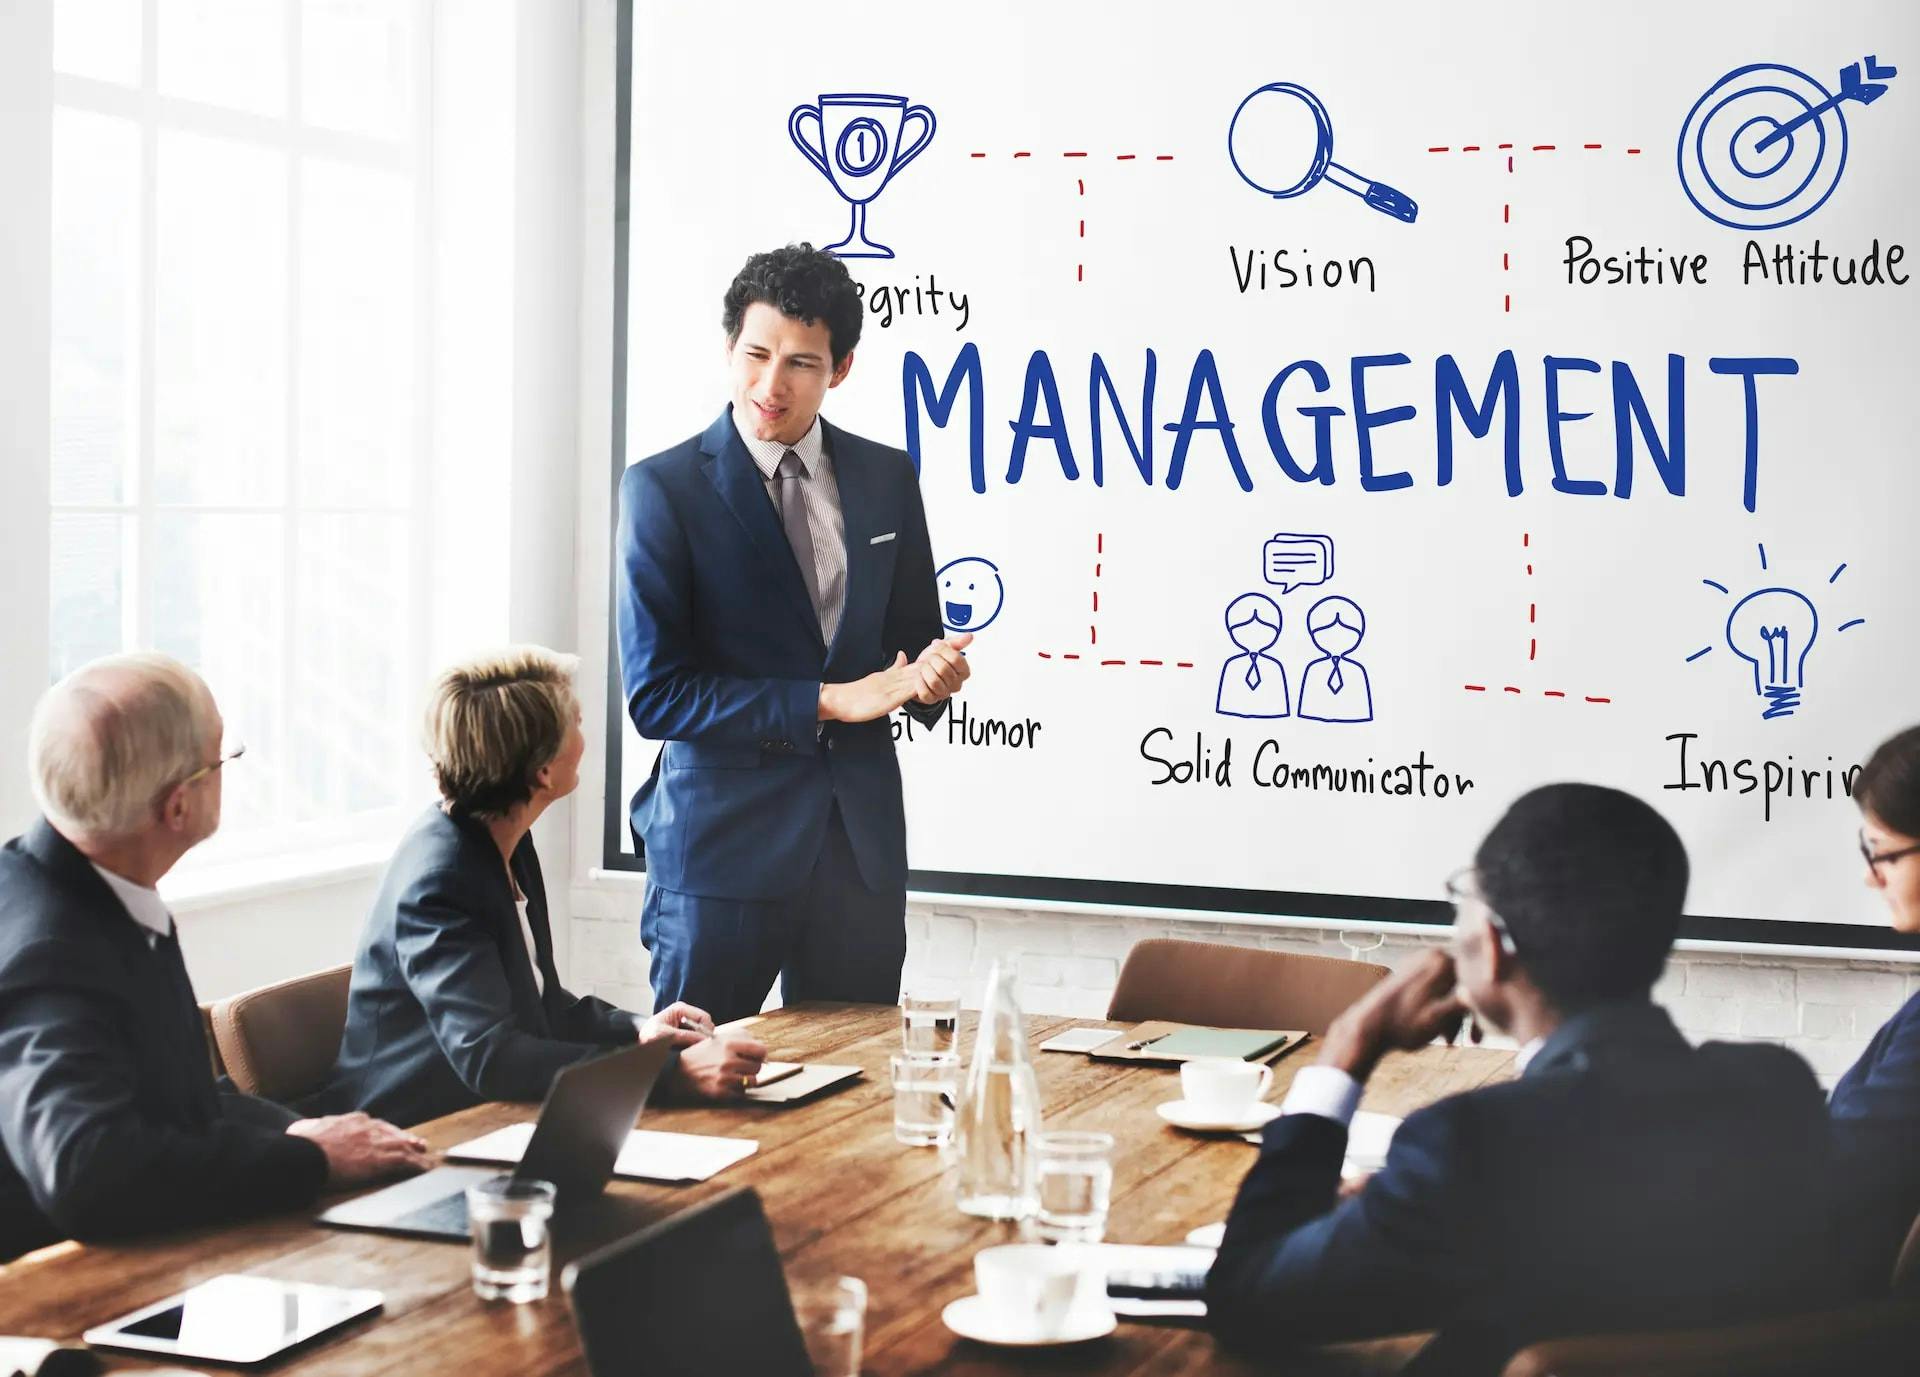 BVoc in Management and Entrepreneurship